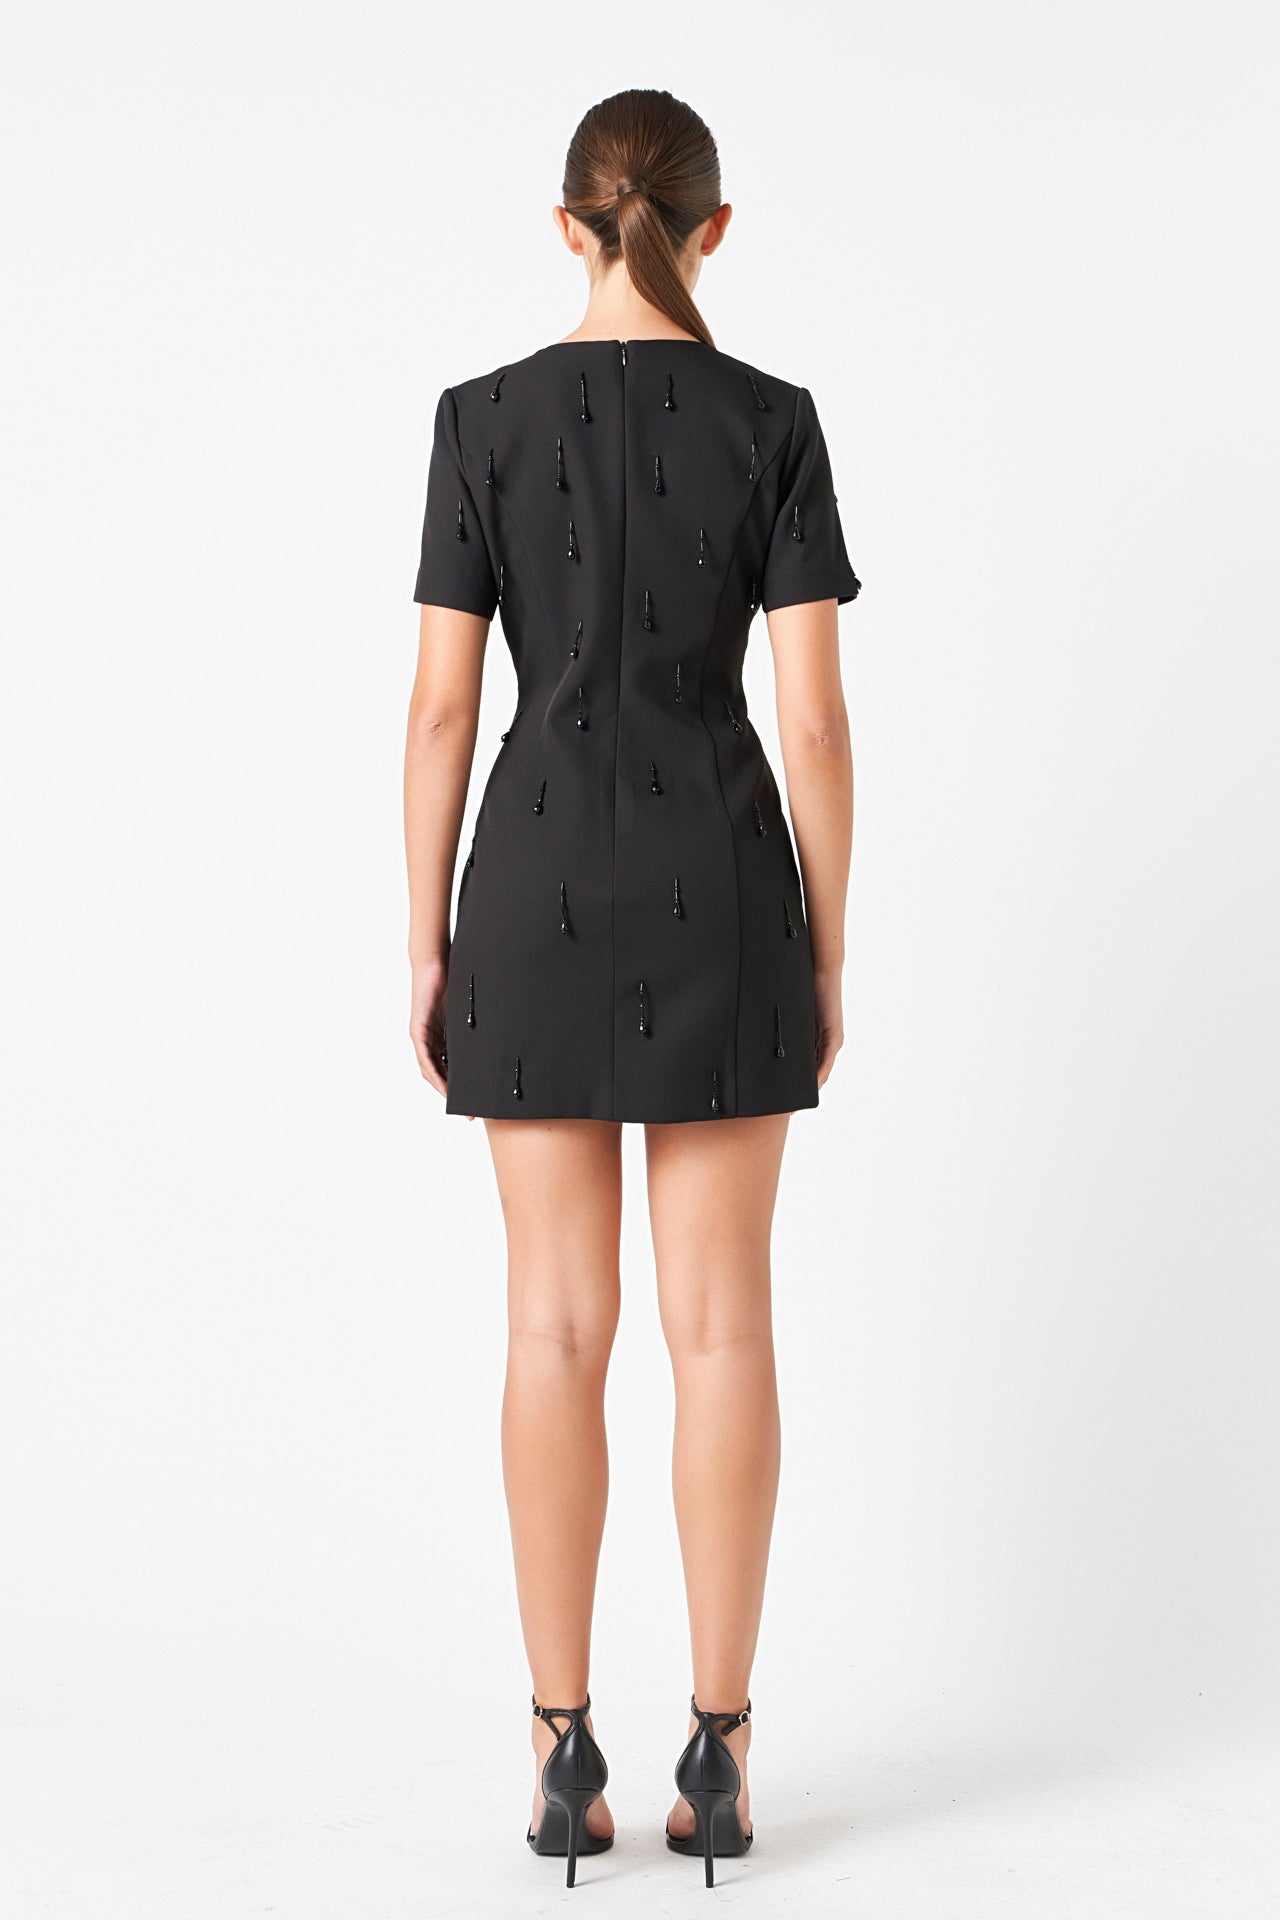 Lux Dress - Short Sleeve Mini